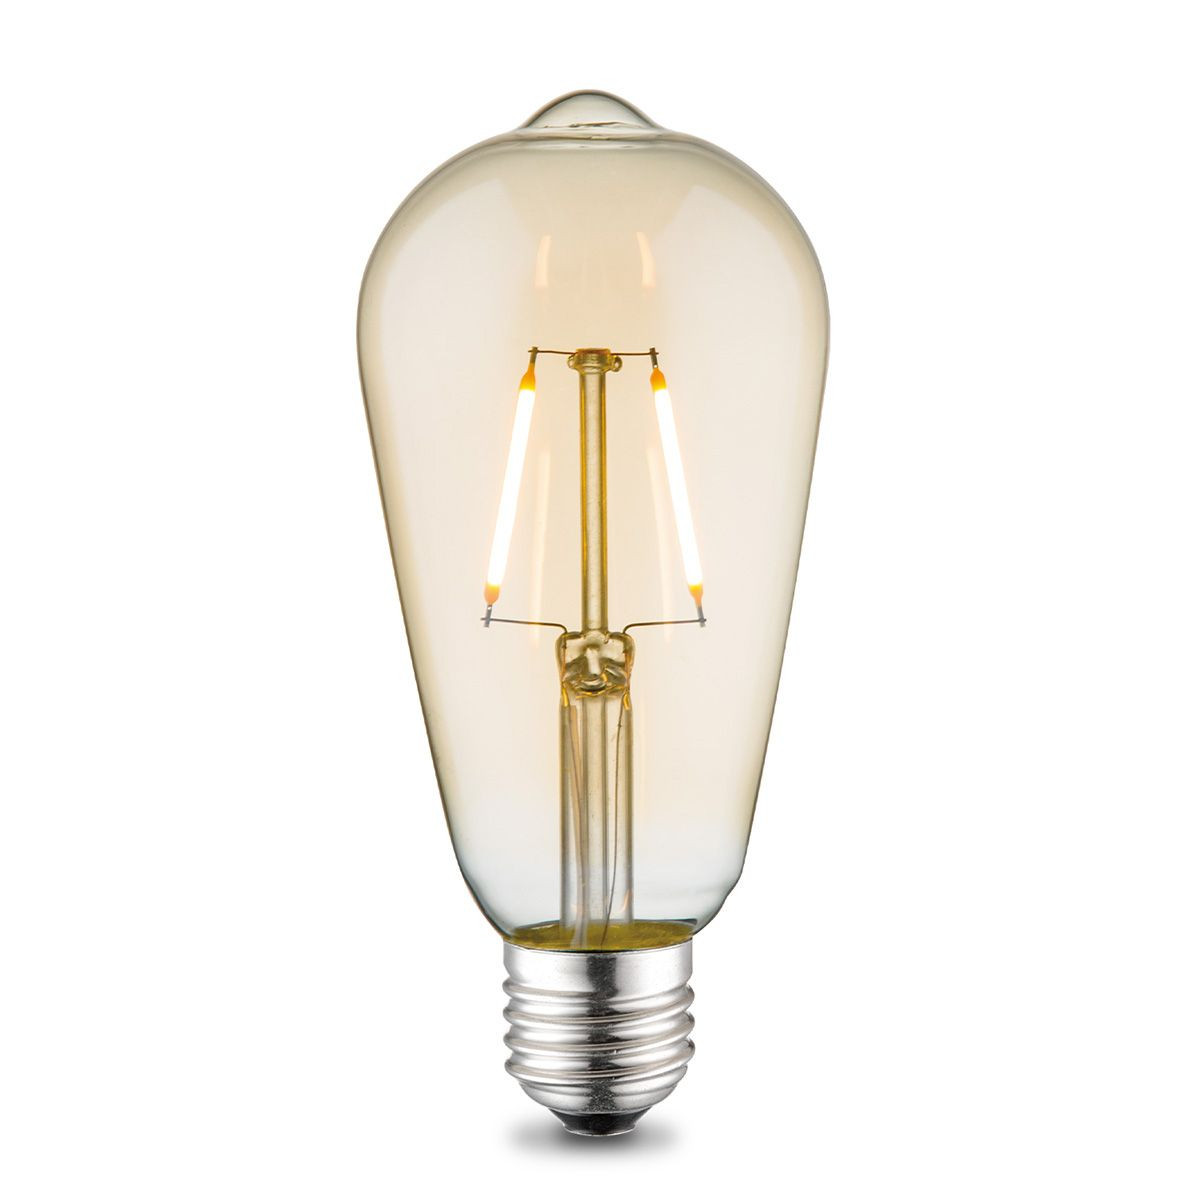 Edison Vintage LED lamp E27 LED filament lichtbron, Deco Drop ST64, 6.4/6.4/14cm, Amber, Retro LED lamp 2W 160lm 2700K, warm wit licht, geschikt voor E27 fitting